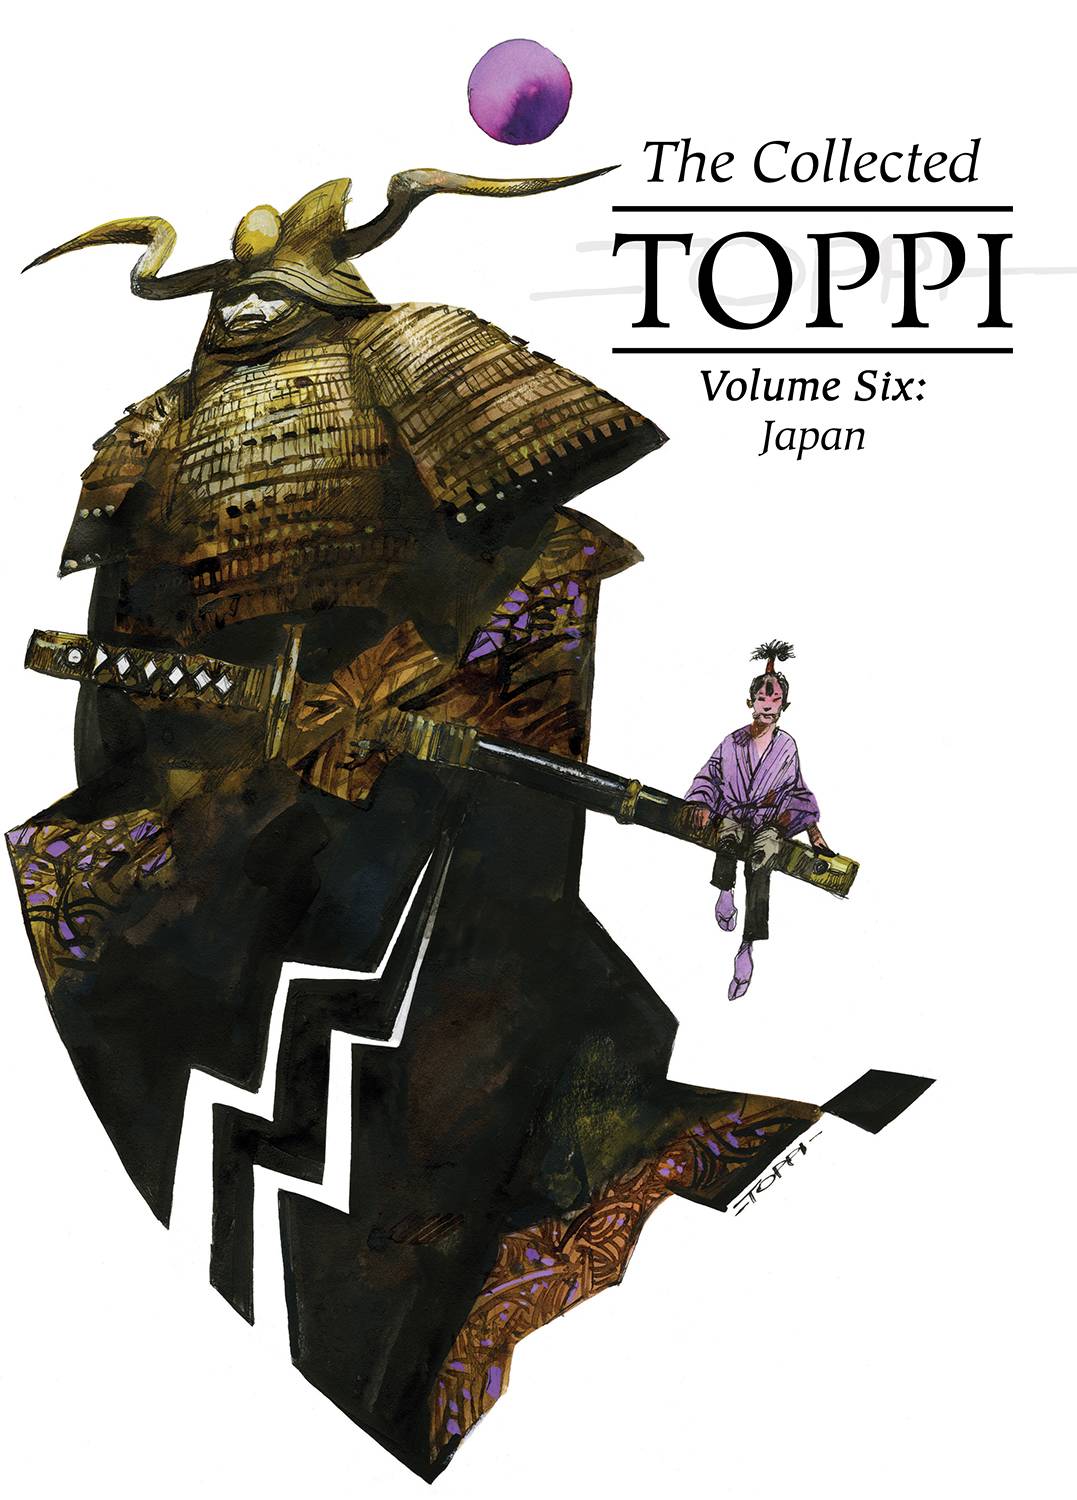 COLLECTED TOPPI HC VOL 06 JAPAN (MR)